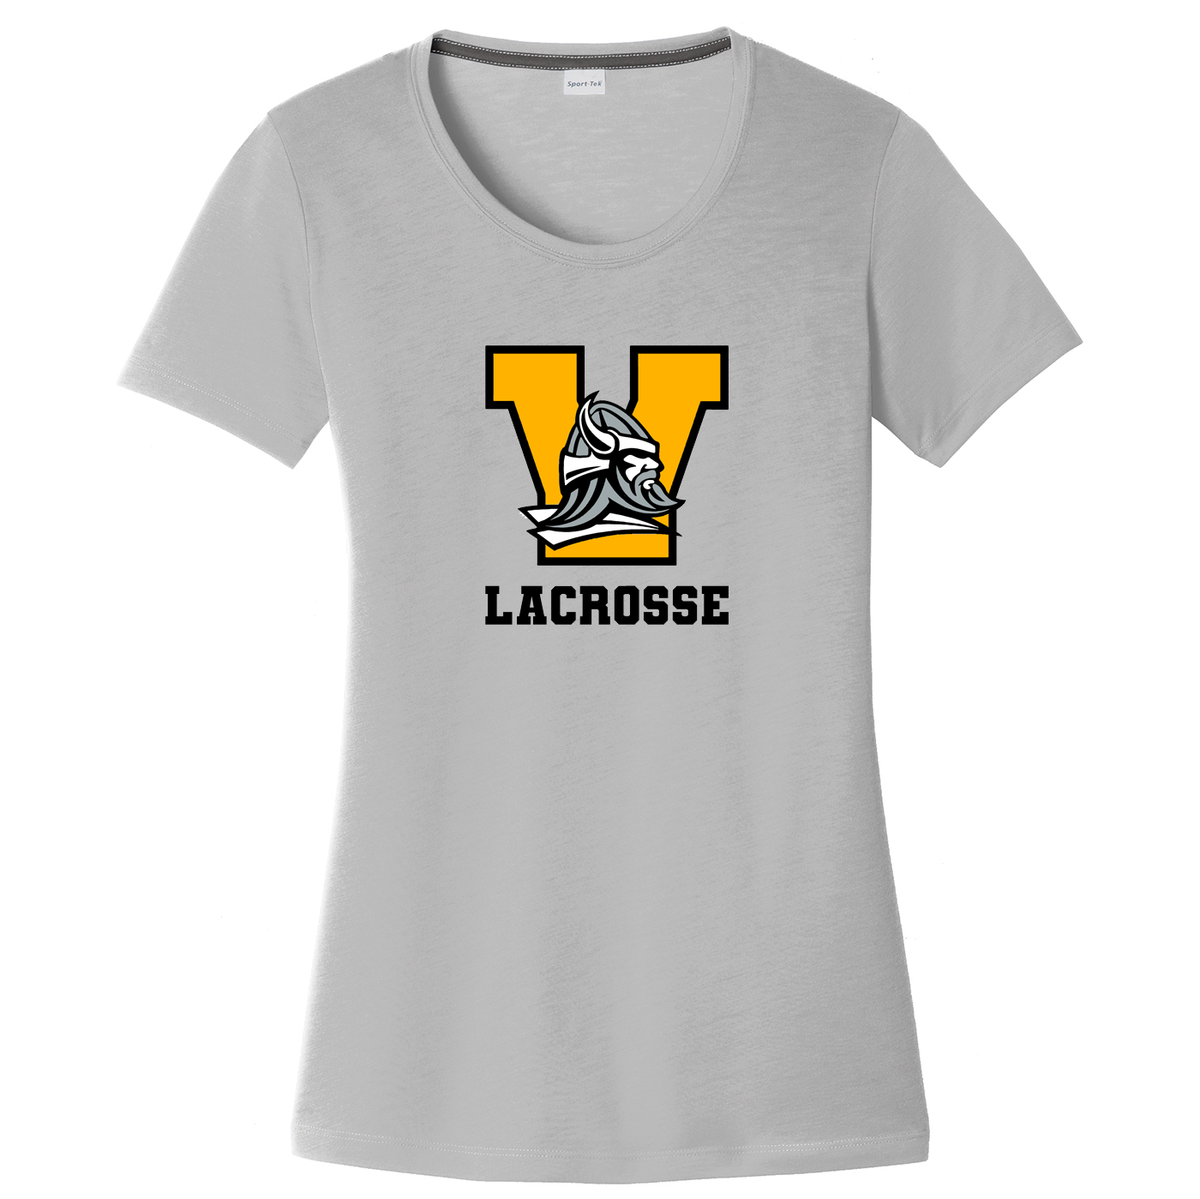 Inglemoor Lacrosse Women's CottonTouch Performance T-Shirt